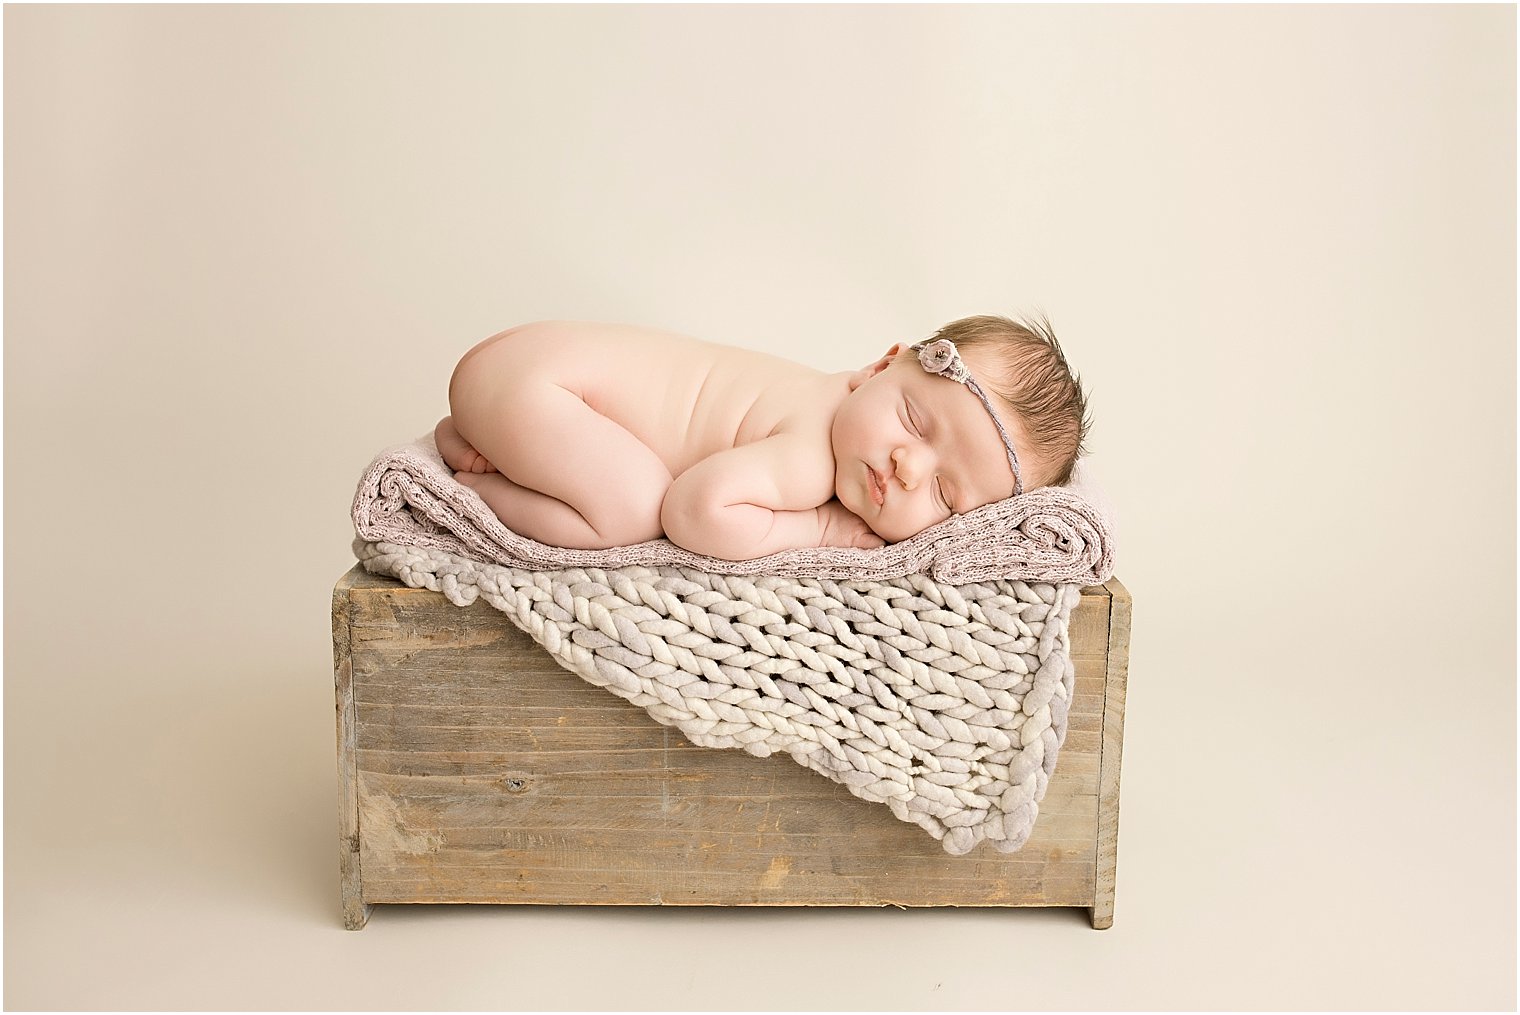 Newborn baby on crate